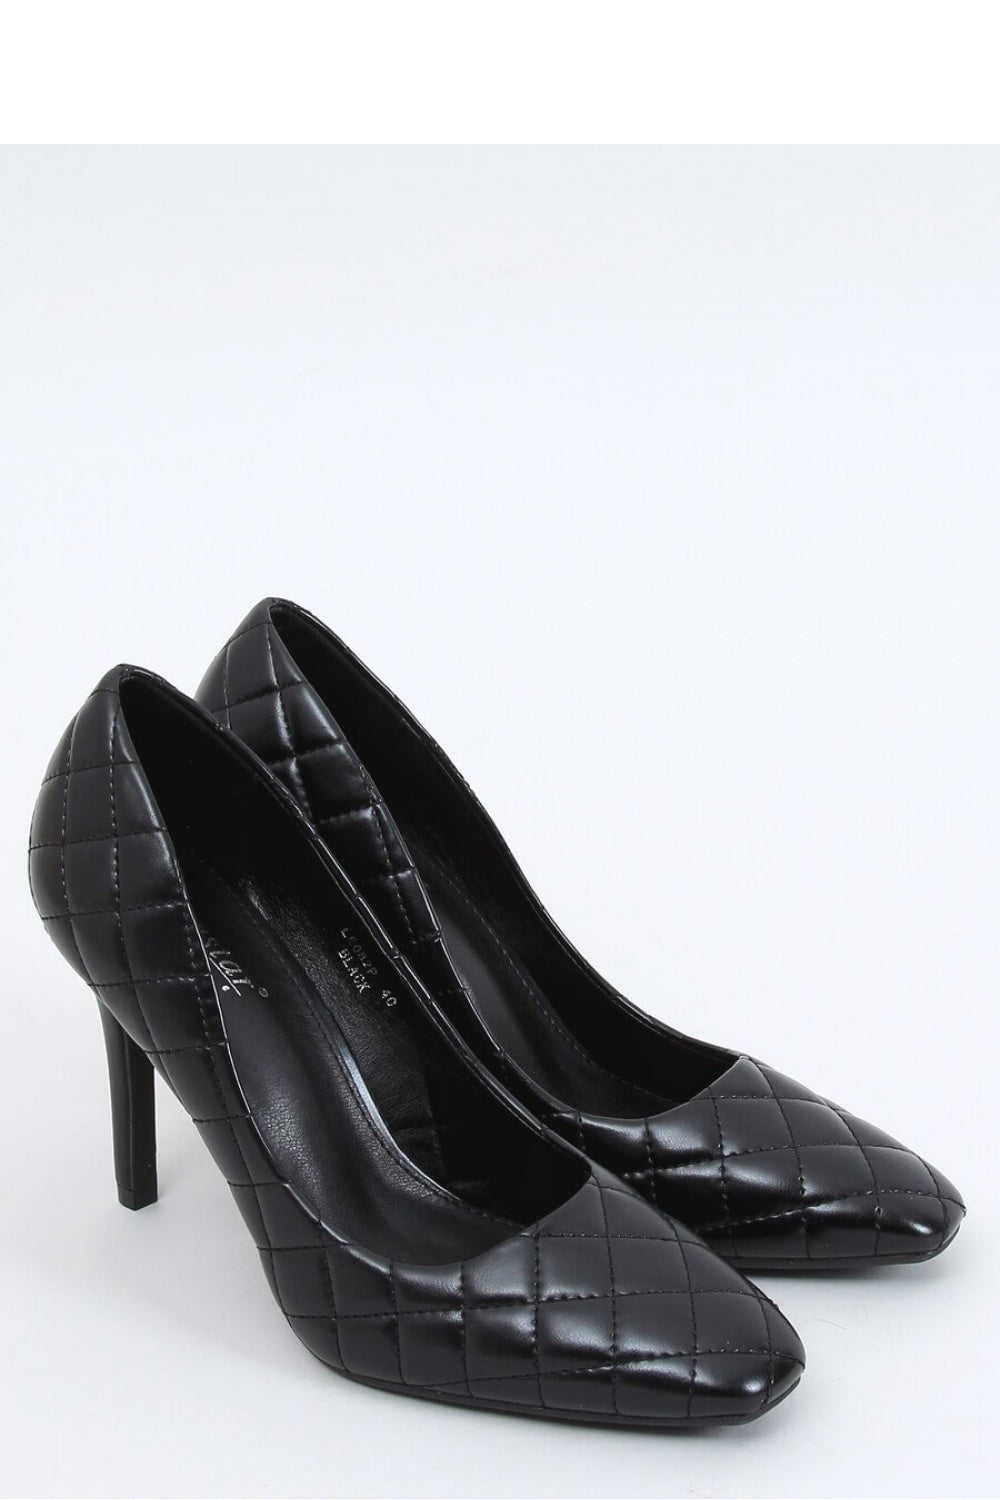 High heels model 152253 Inello Posh Styles Apparel